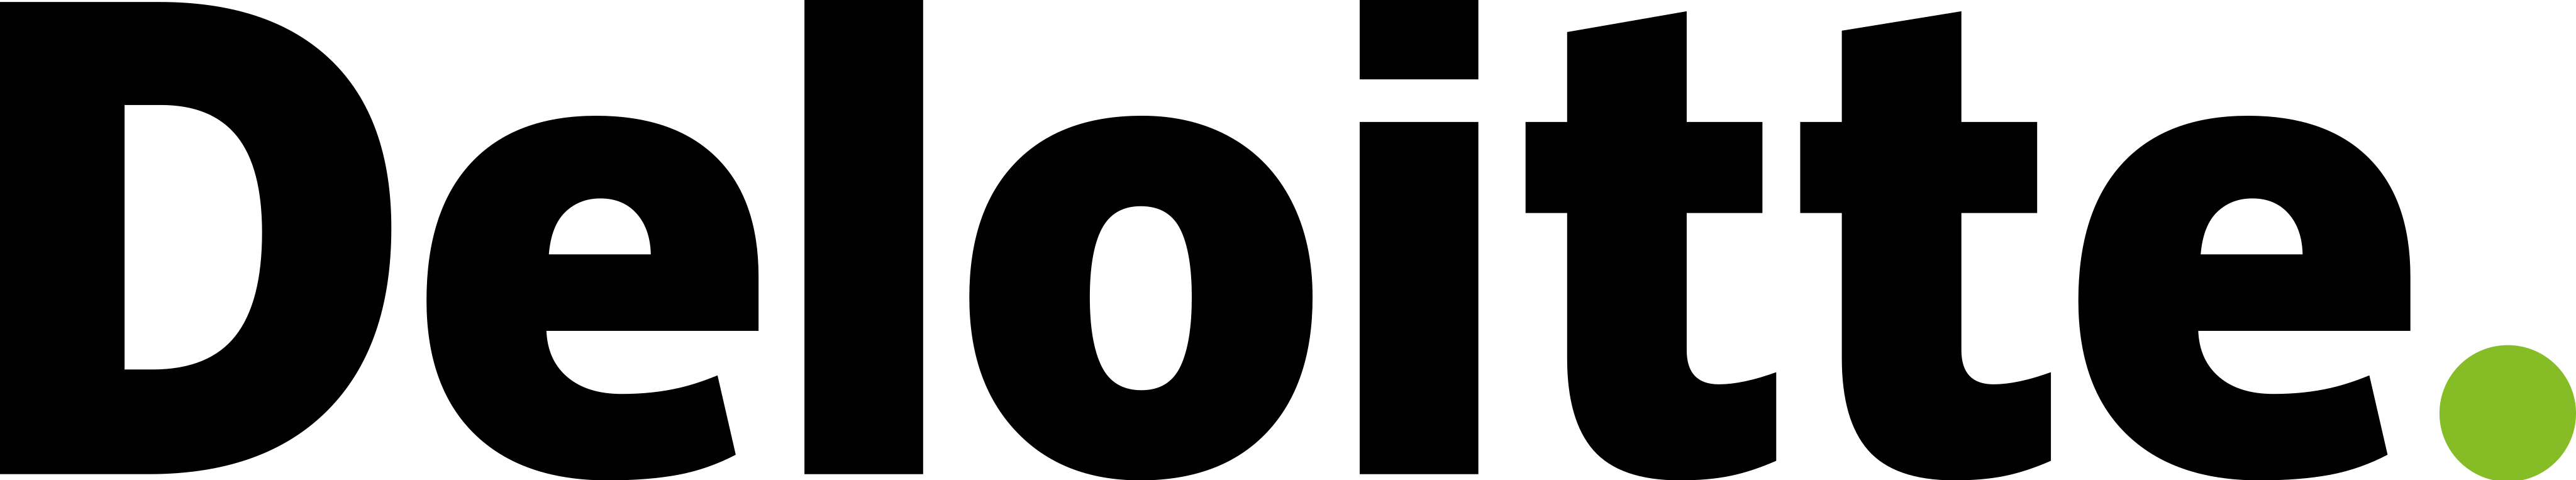 Deloite logo